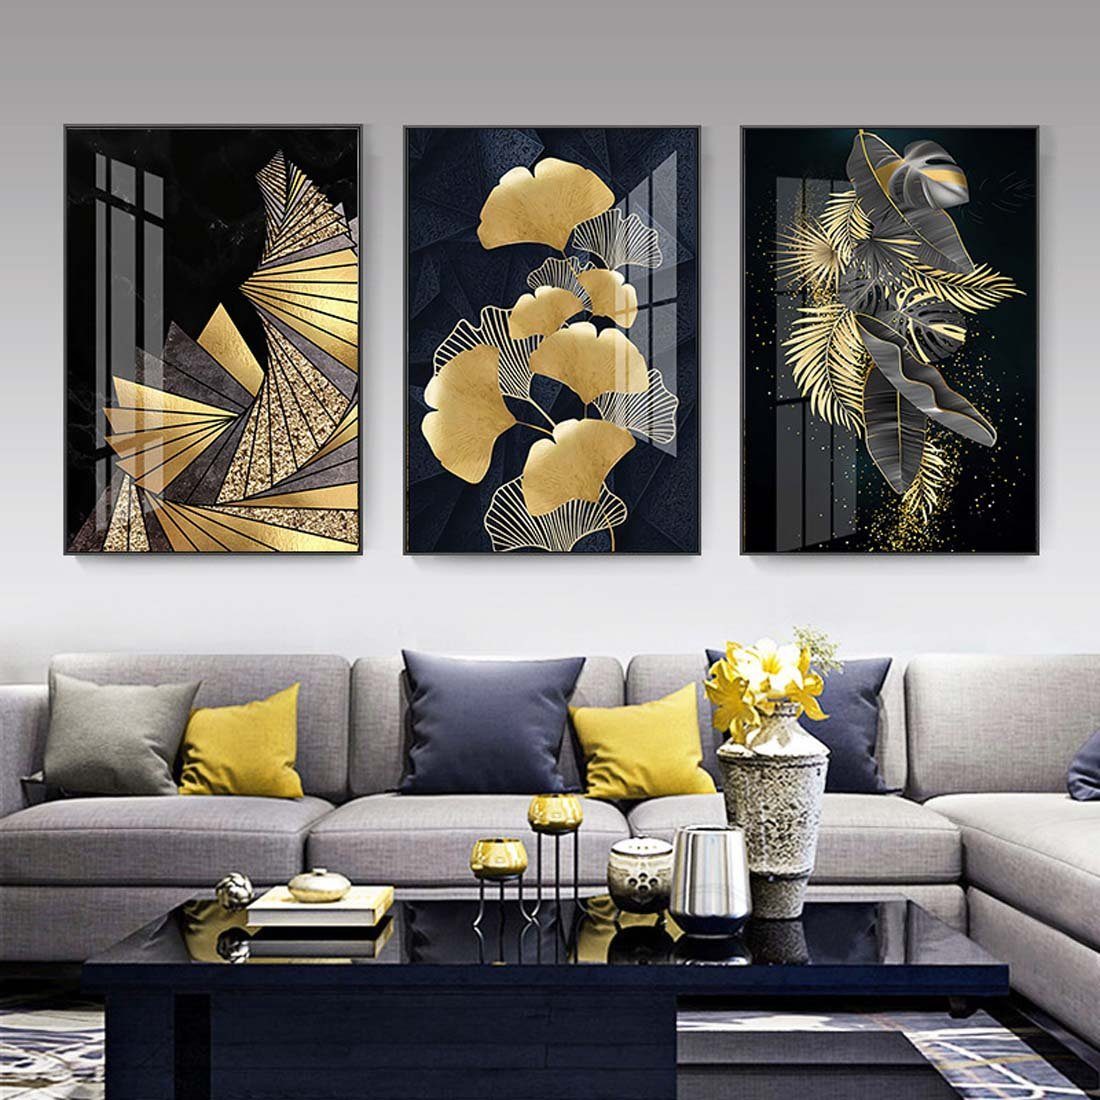 YANN Wandbild Goldenes, luxuriöses modernes hängendes Leinwandgemälde, 20*30cm (Heimdekorationsgemälde, Wandgemälde,Kunstdruck,Gemälde,Wandfolie, 3 St), rahmenloser Wanddekor-Malkern